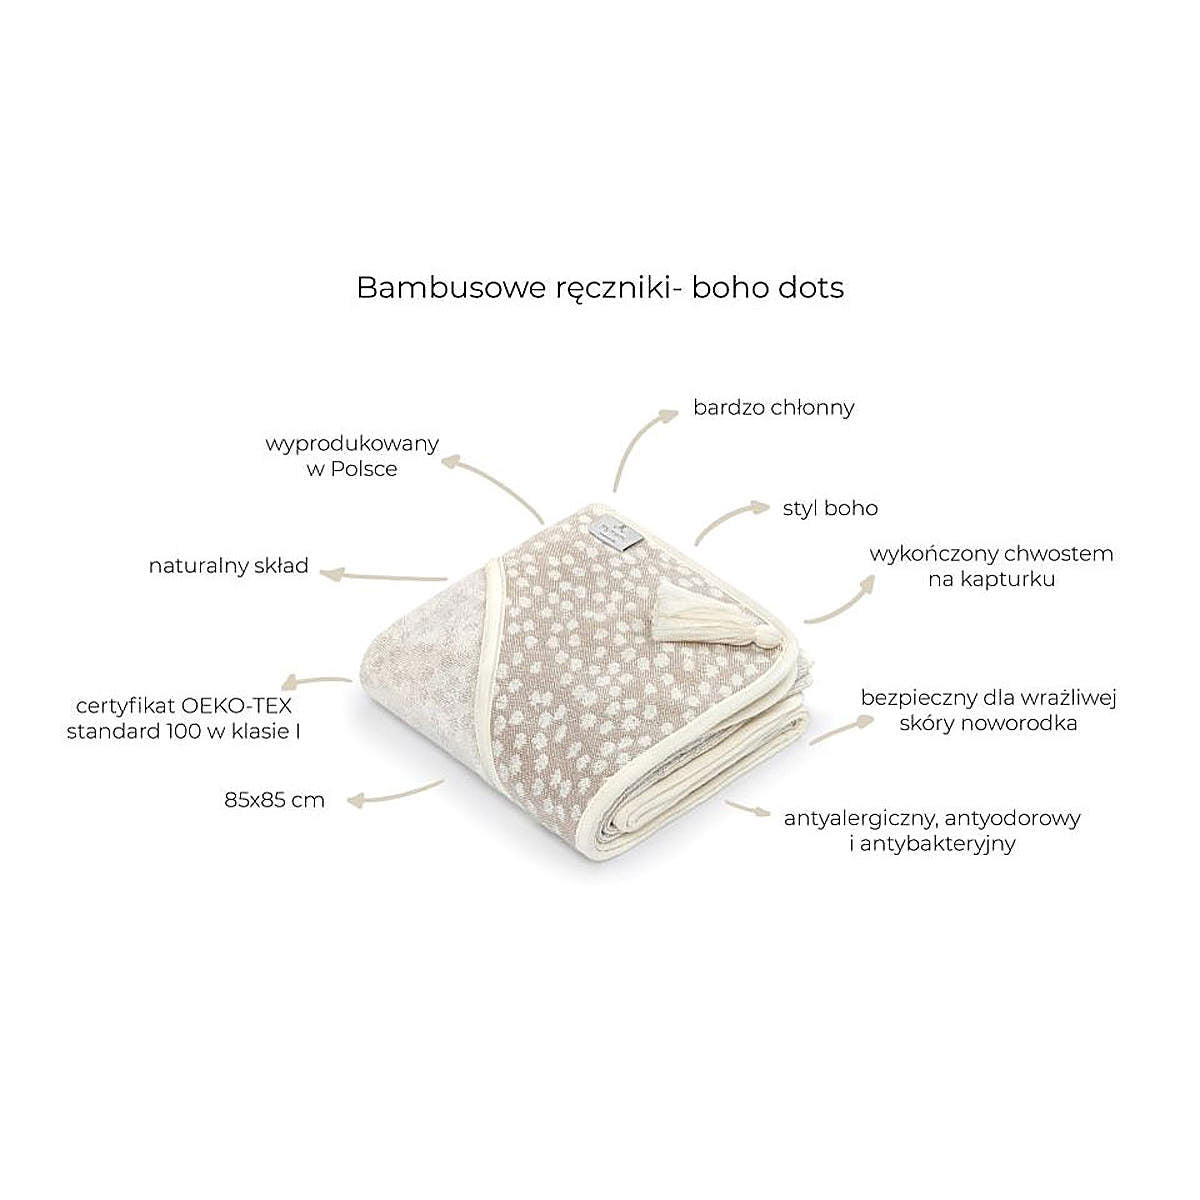 Bambusowy ręcznik - boho dots / leaves - My Memi dots light beige